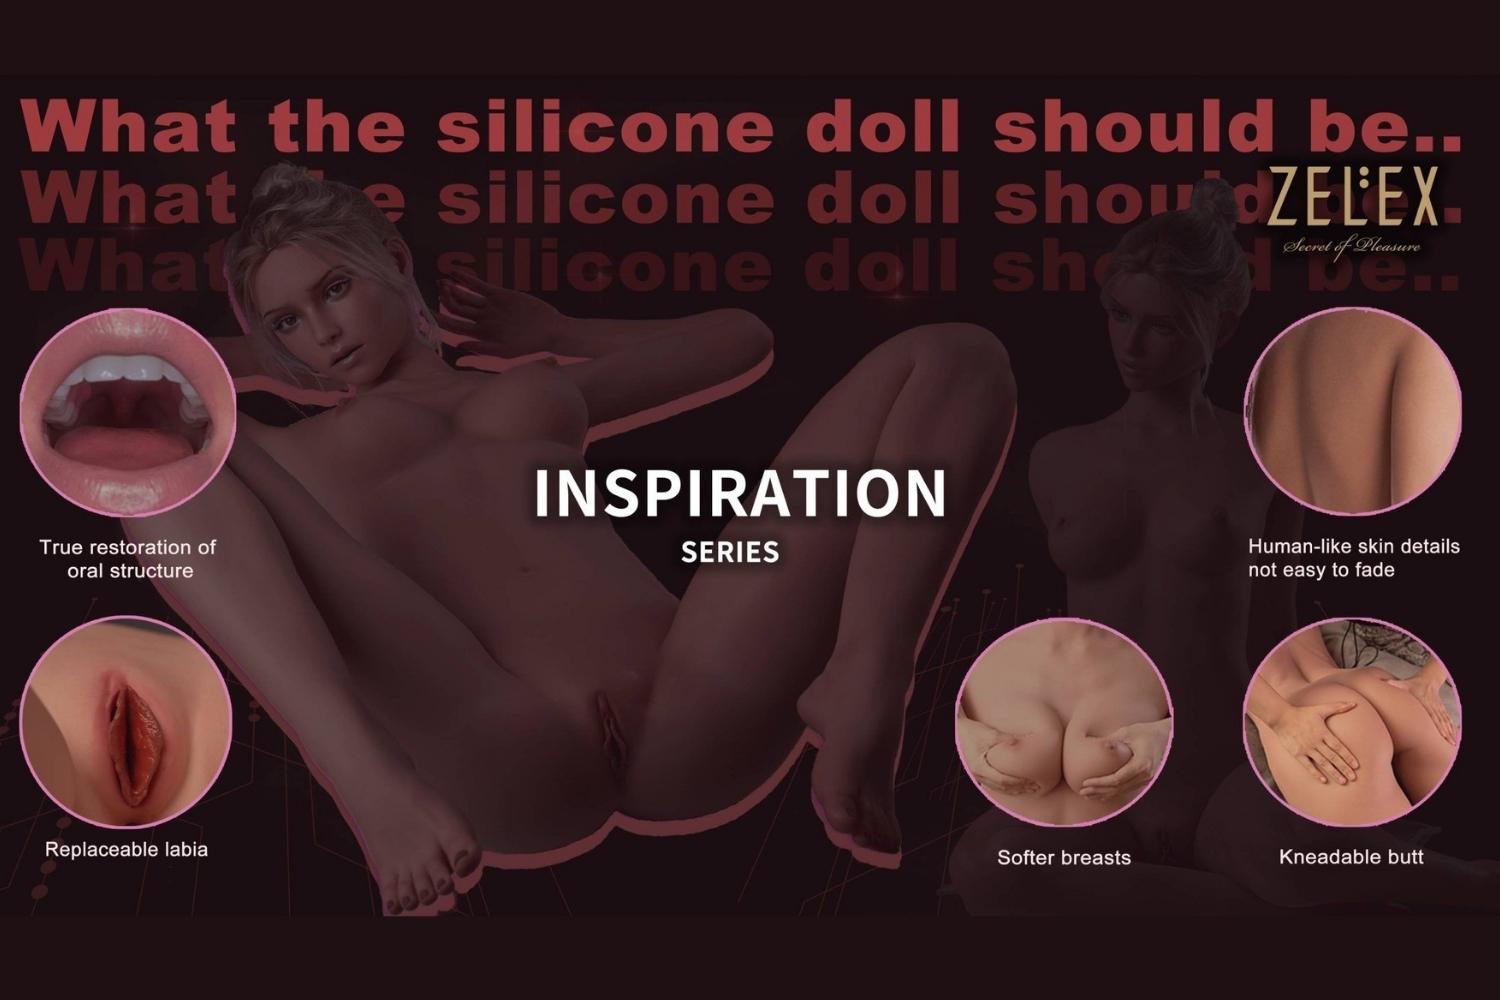 Big News! The Zelex Doll Inspiration Series!